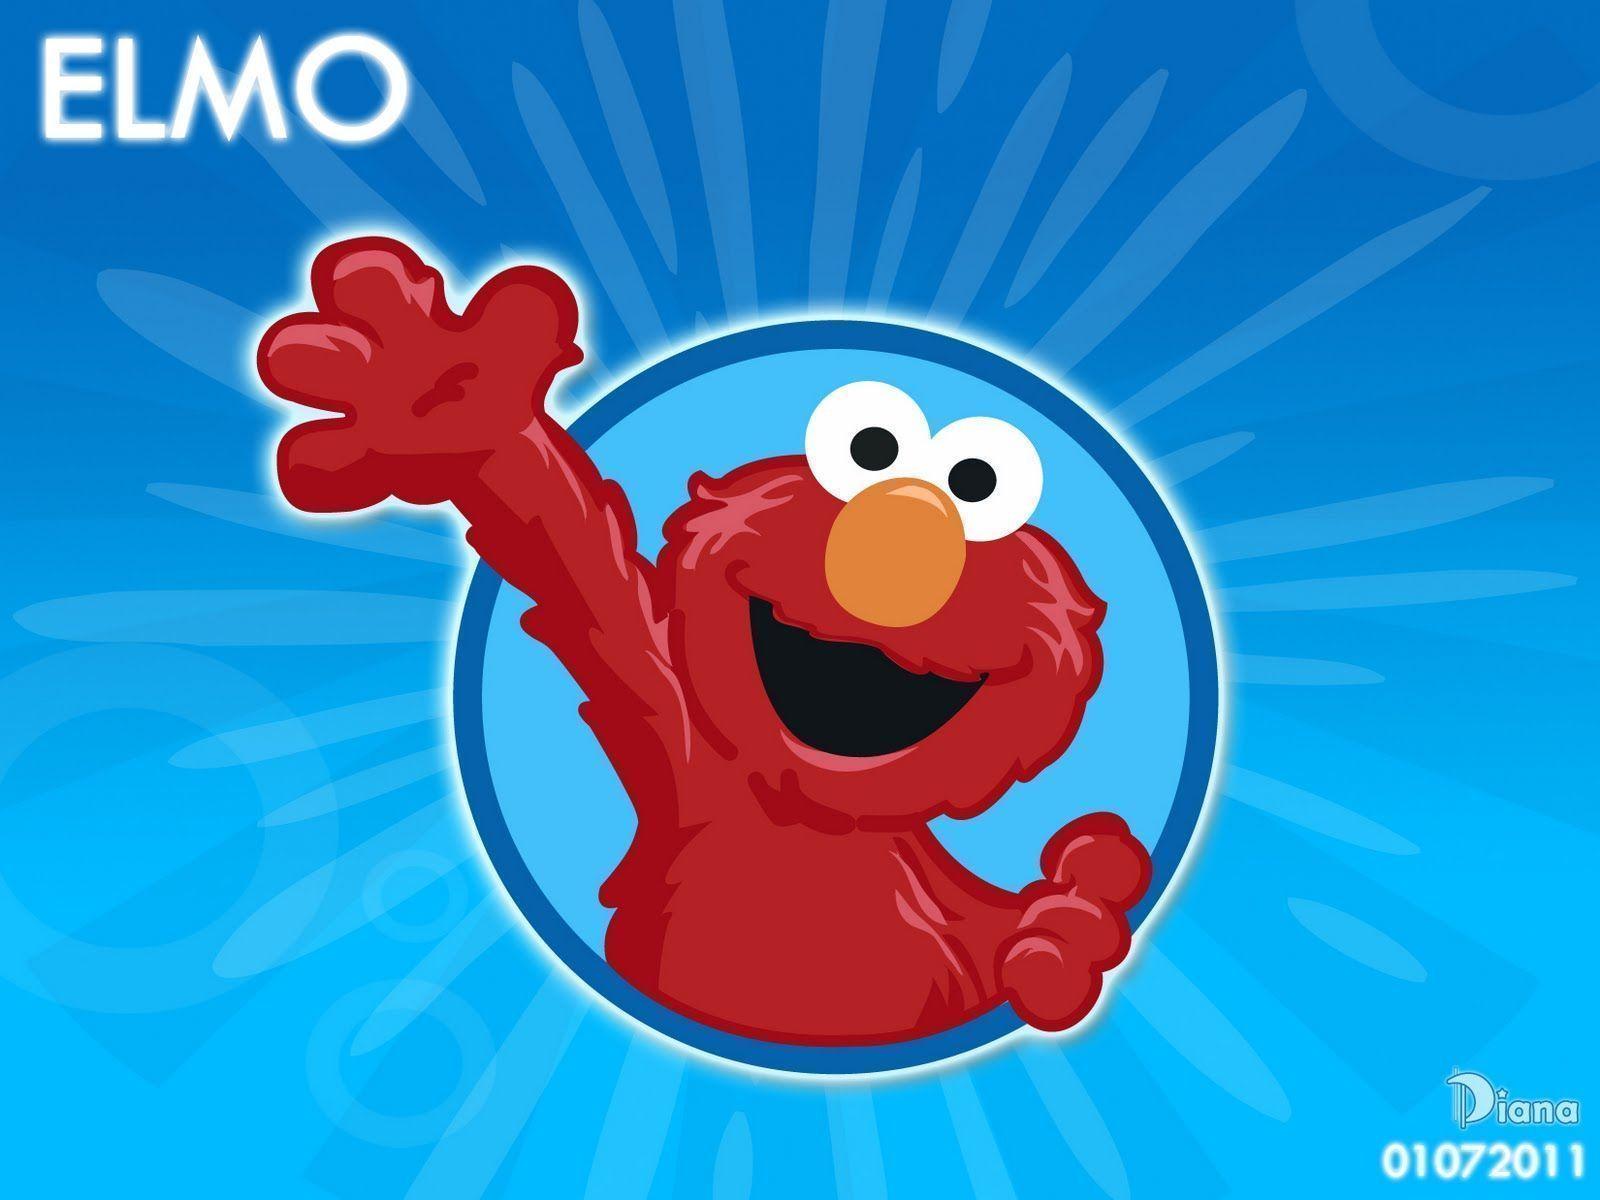 Elmo Photo in High Definition